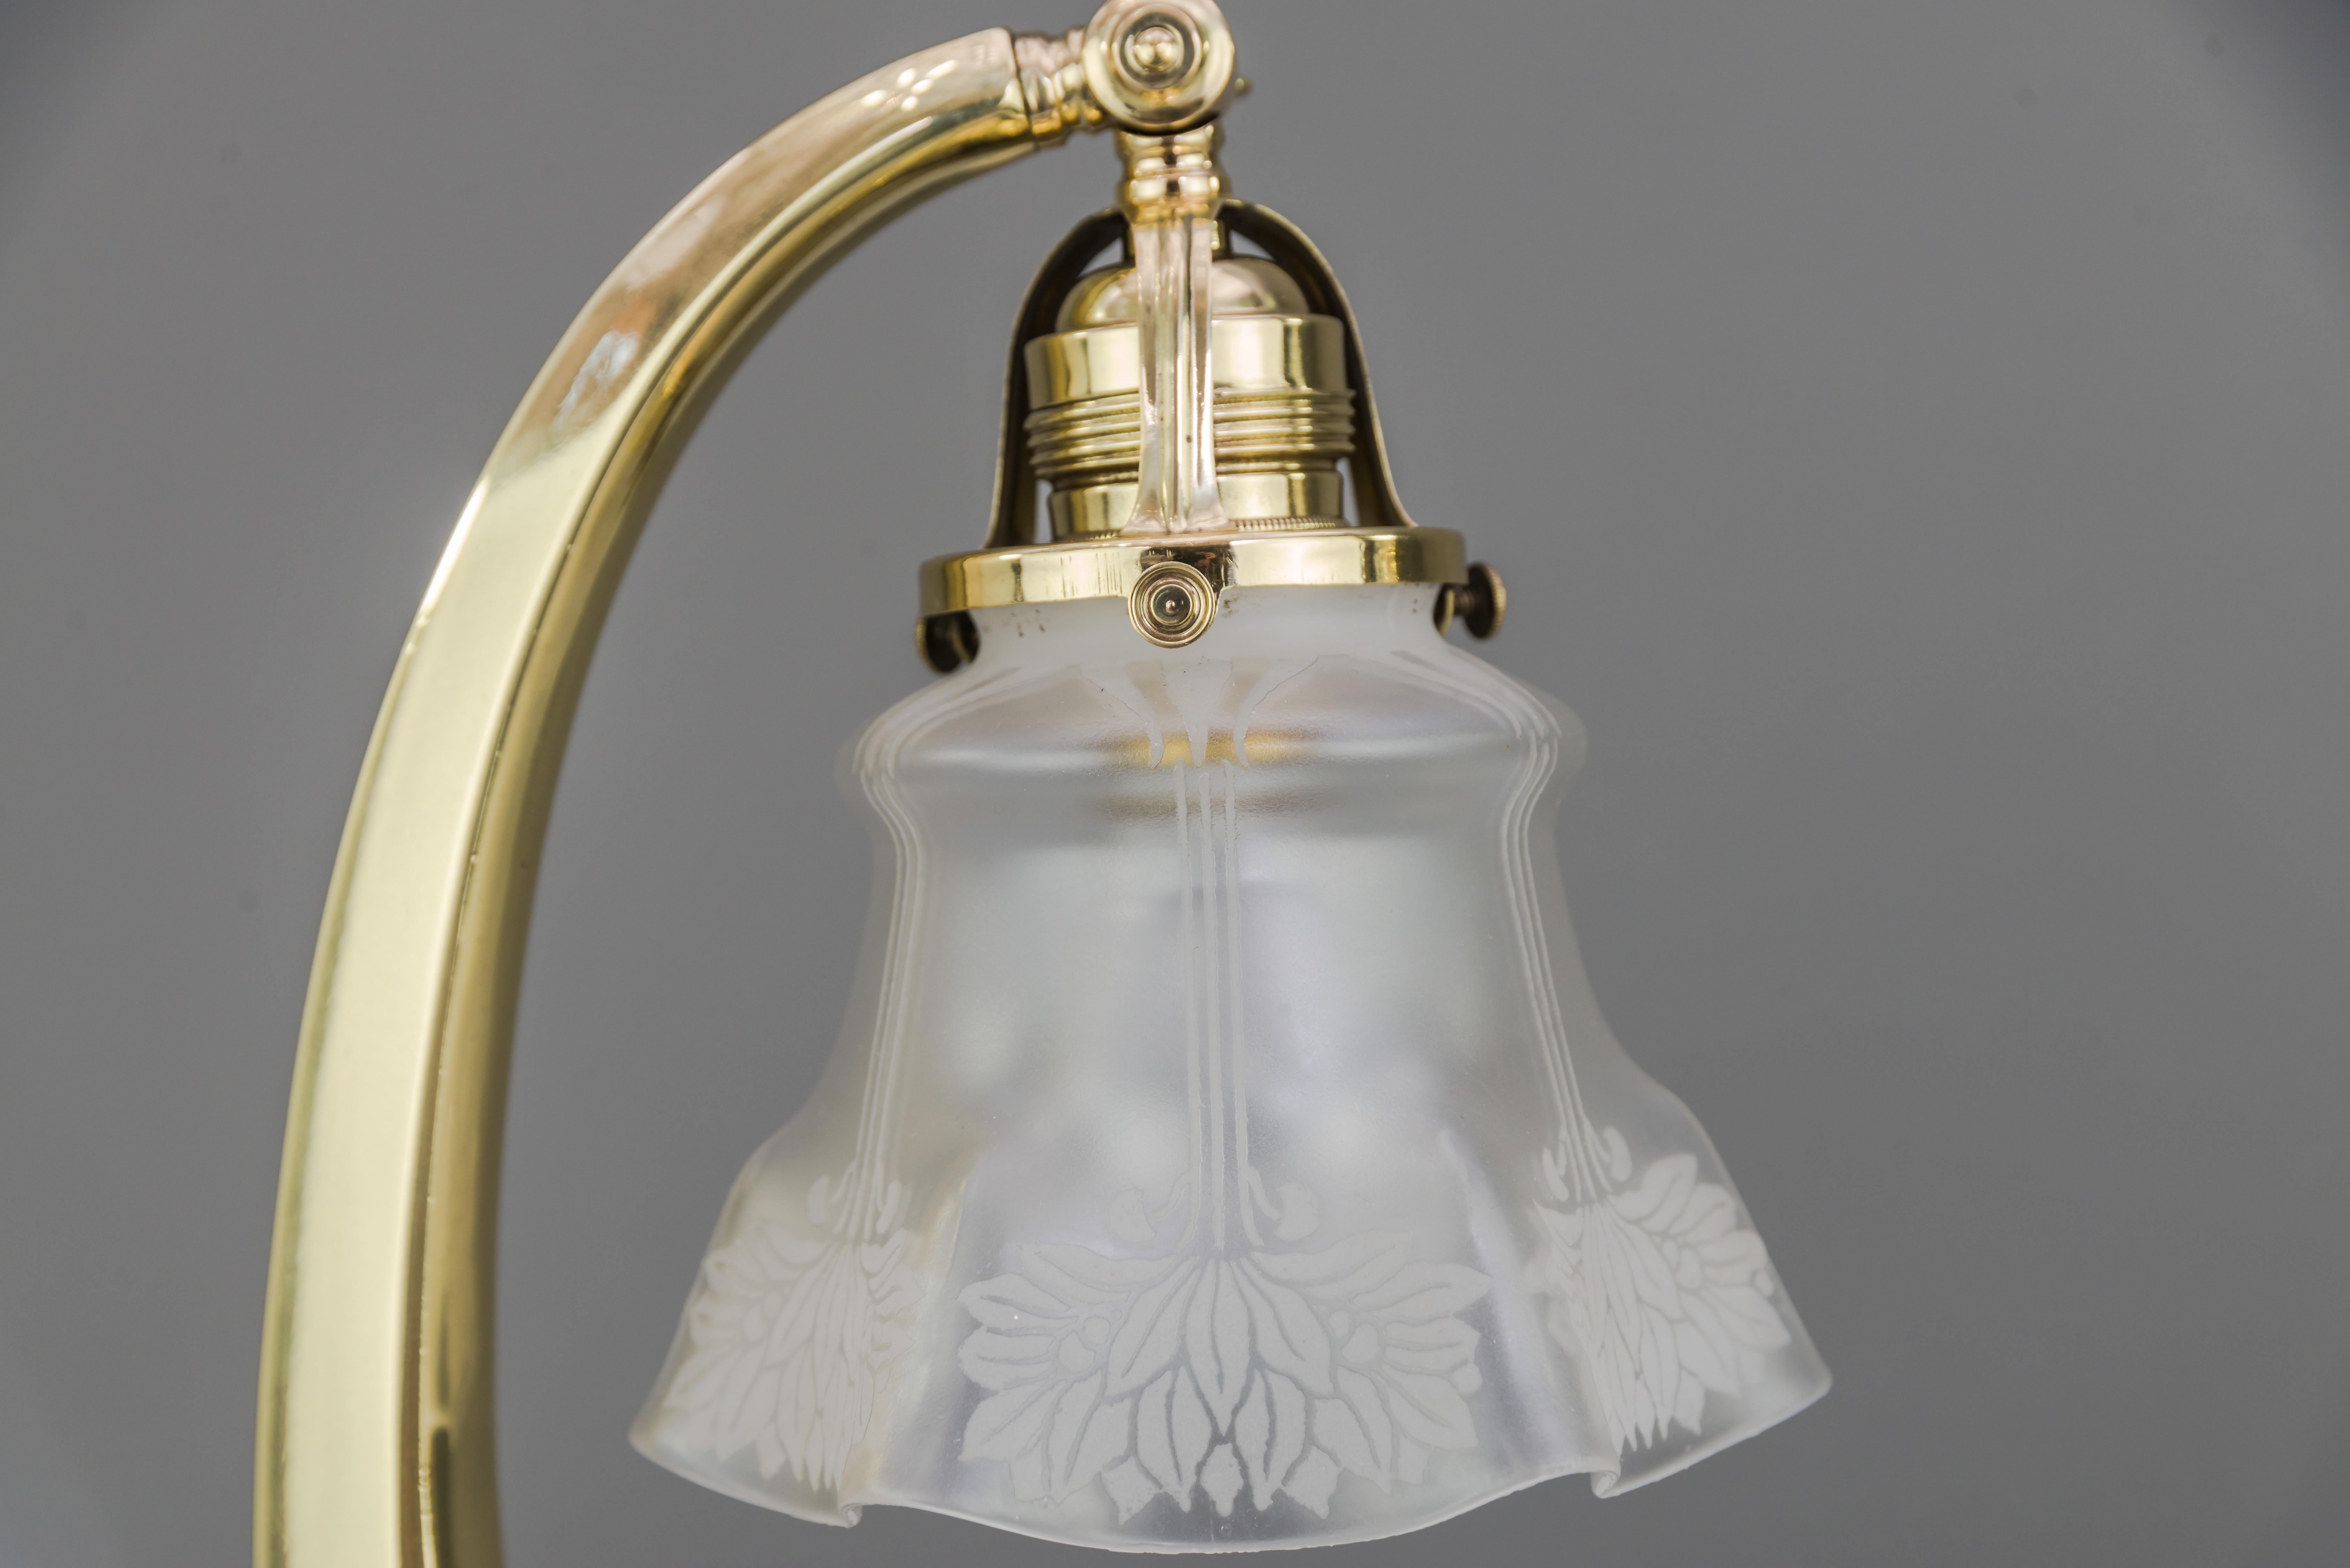 Two Jugendstil Table Lamps 1907 with Original Glas Shades For Sale 5